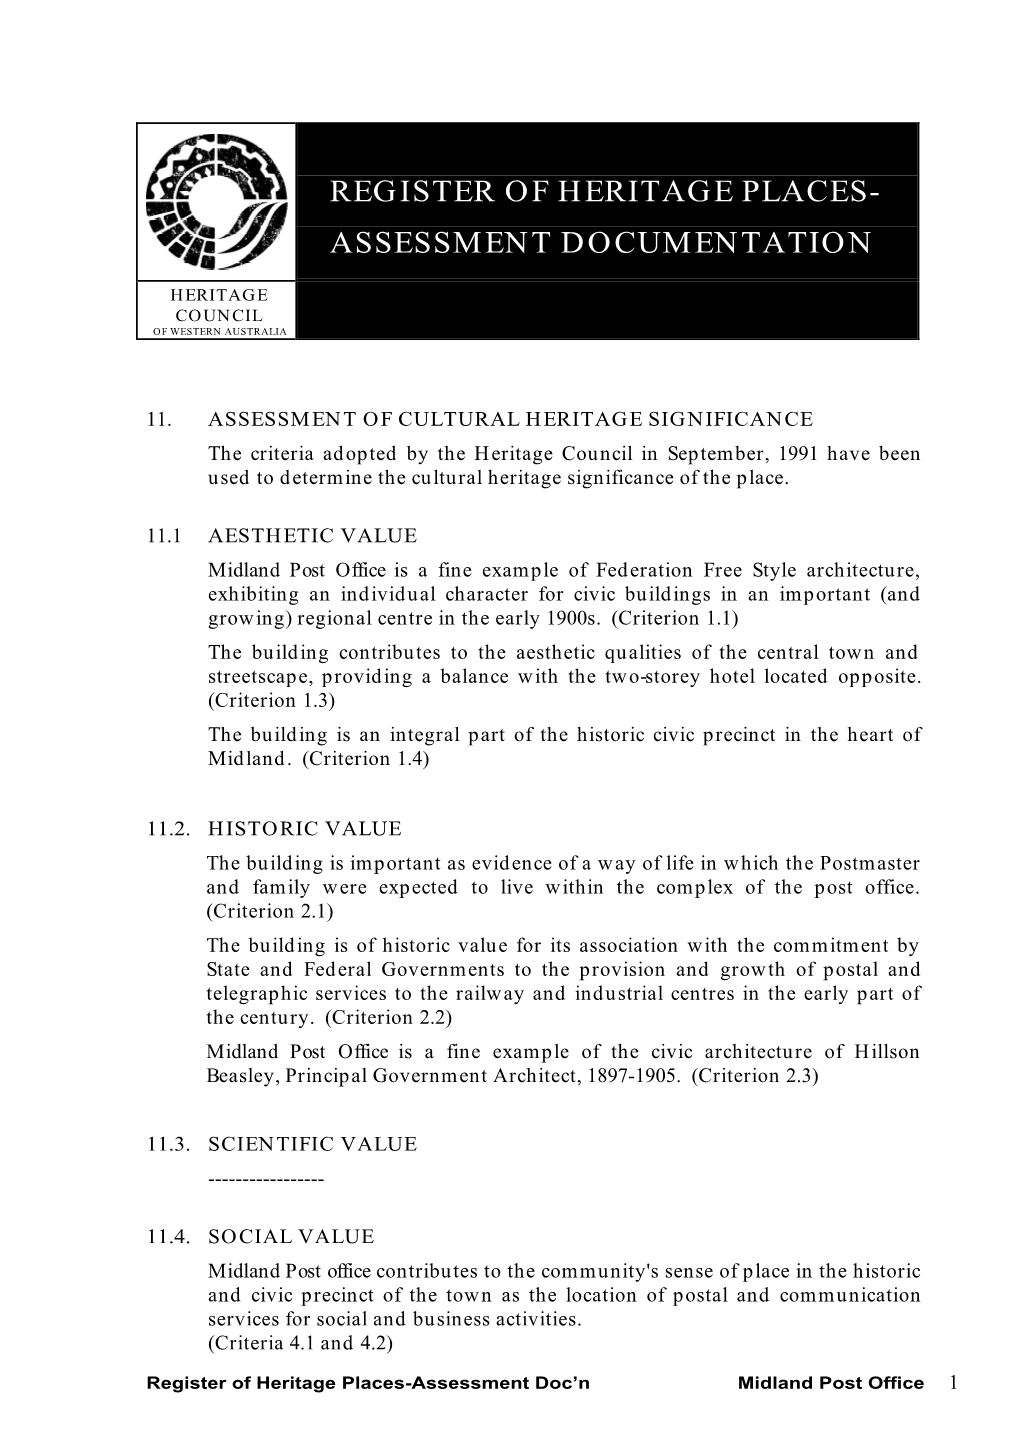 Register of Heritage Places- Assessment Documentation